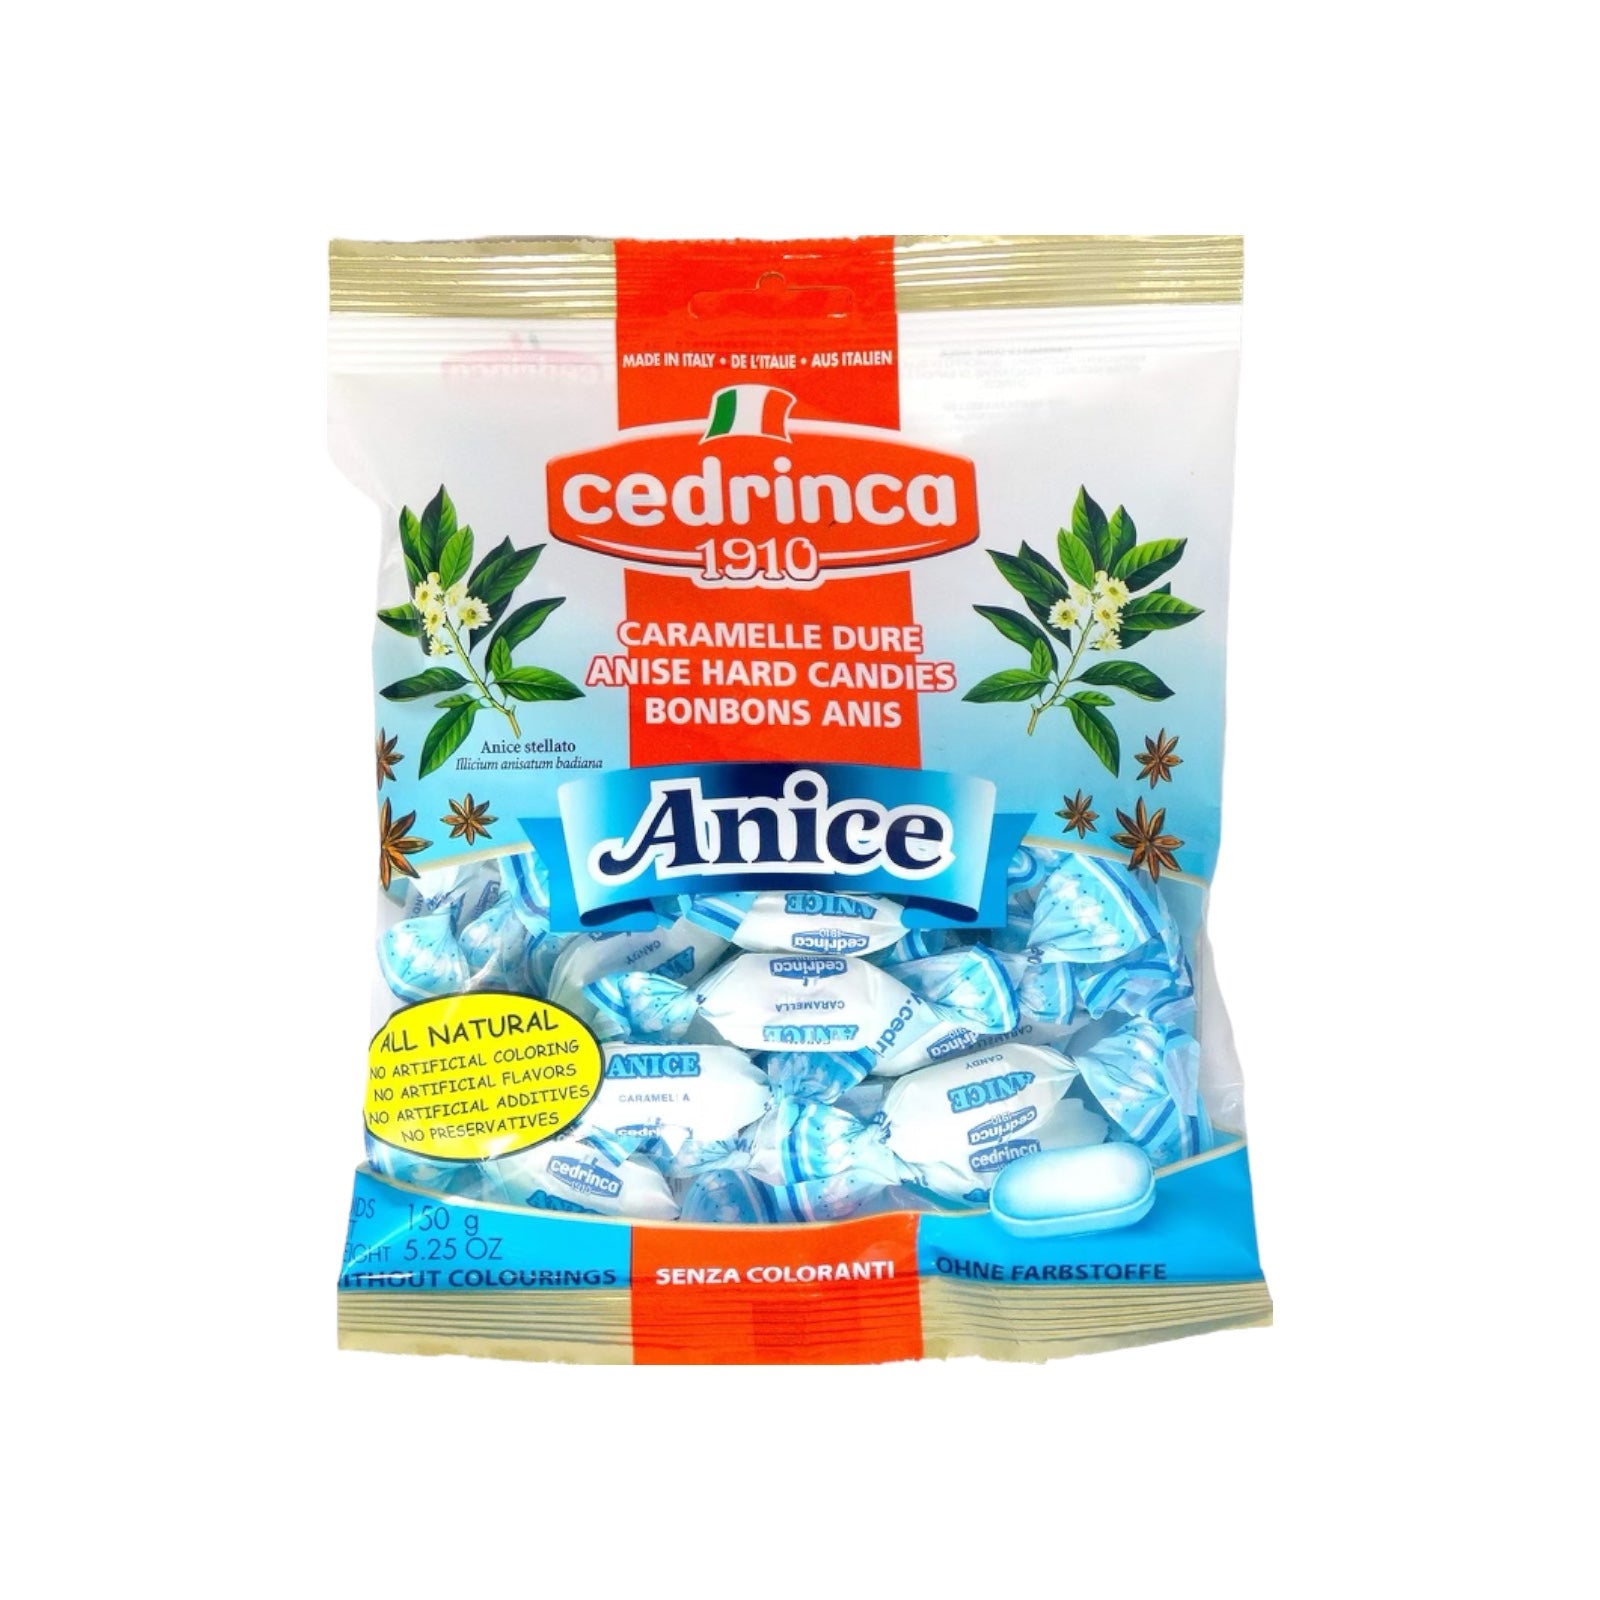 Cedrinca -Anice Hard Candies
Gluten free 150g